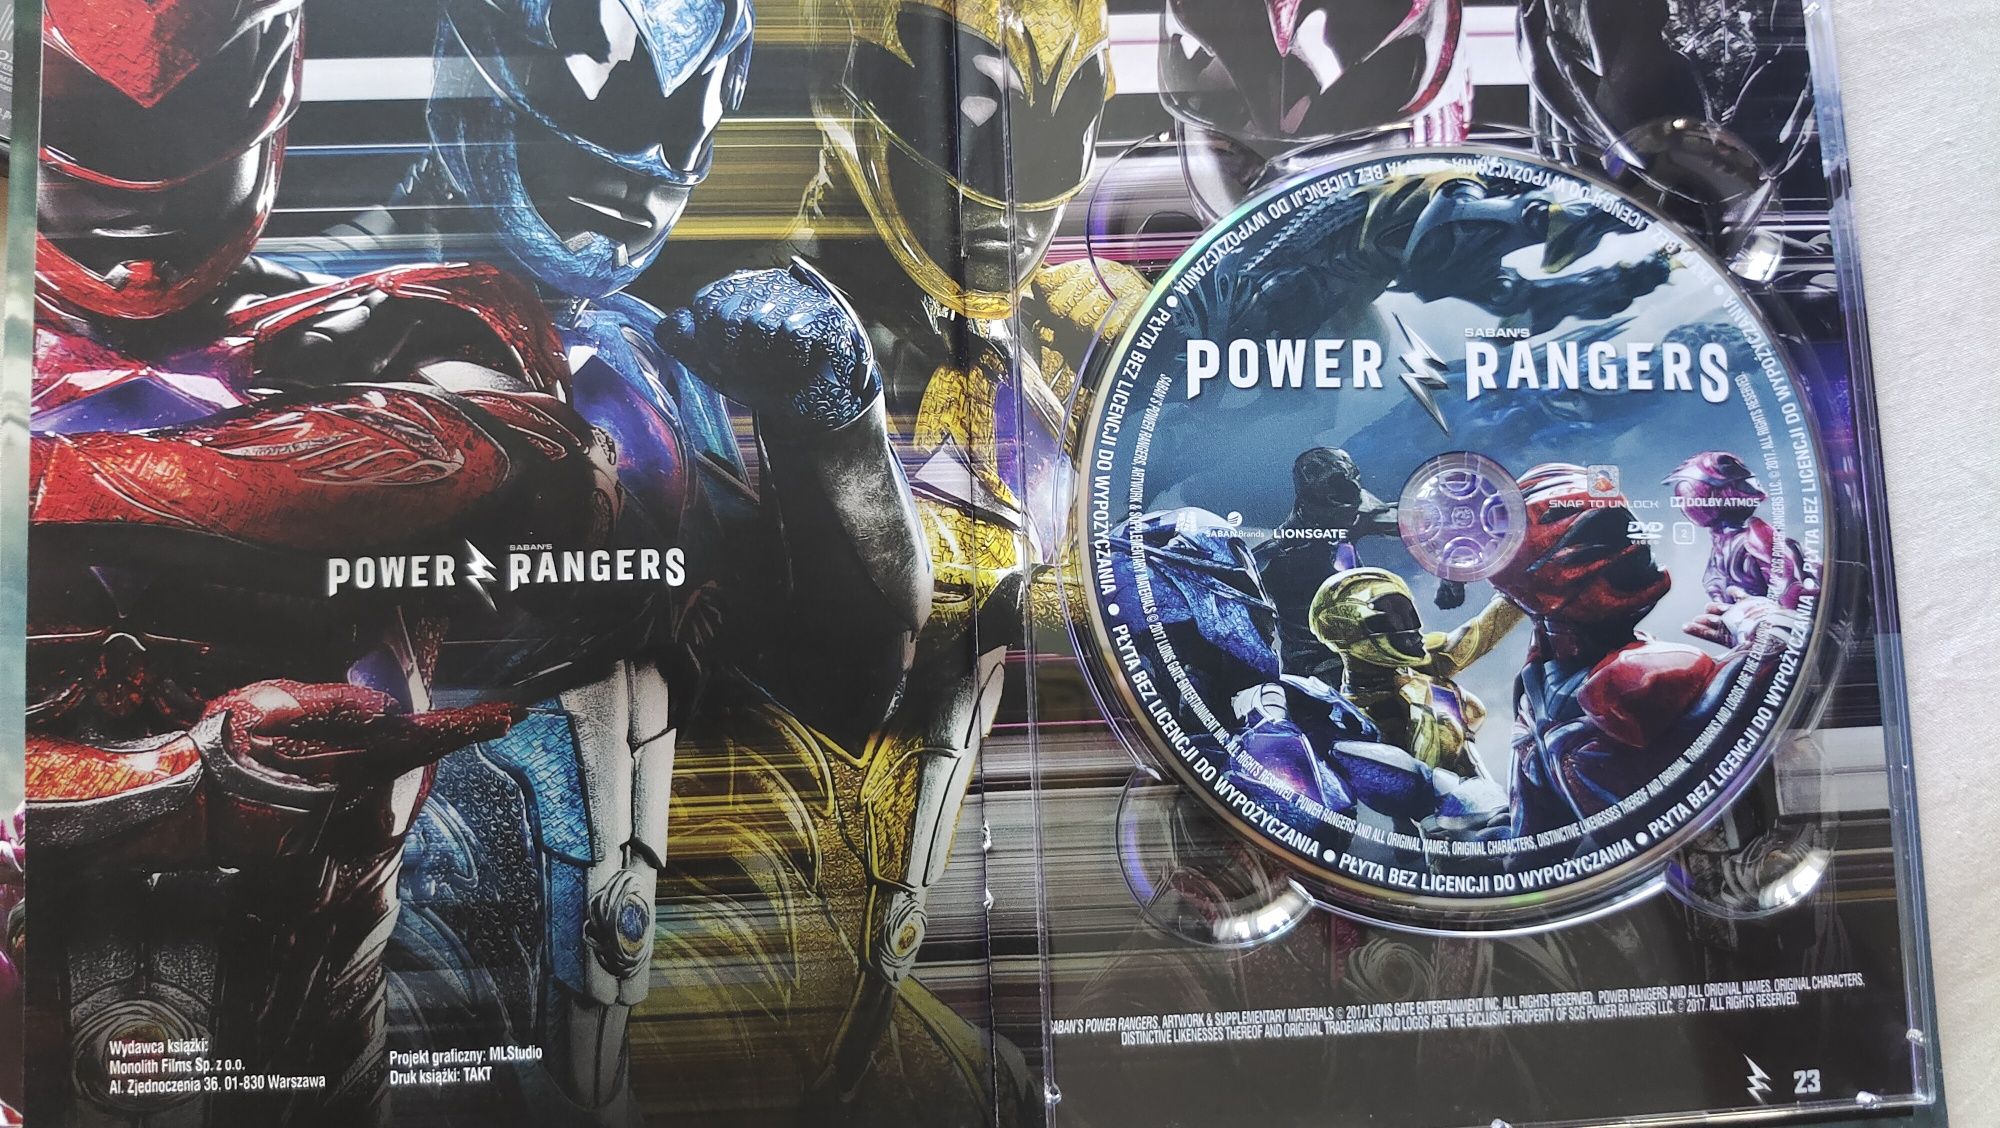 Power Rangers (dvd)